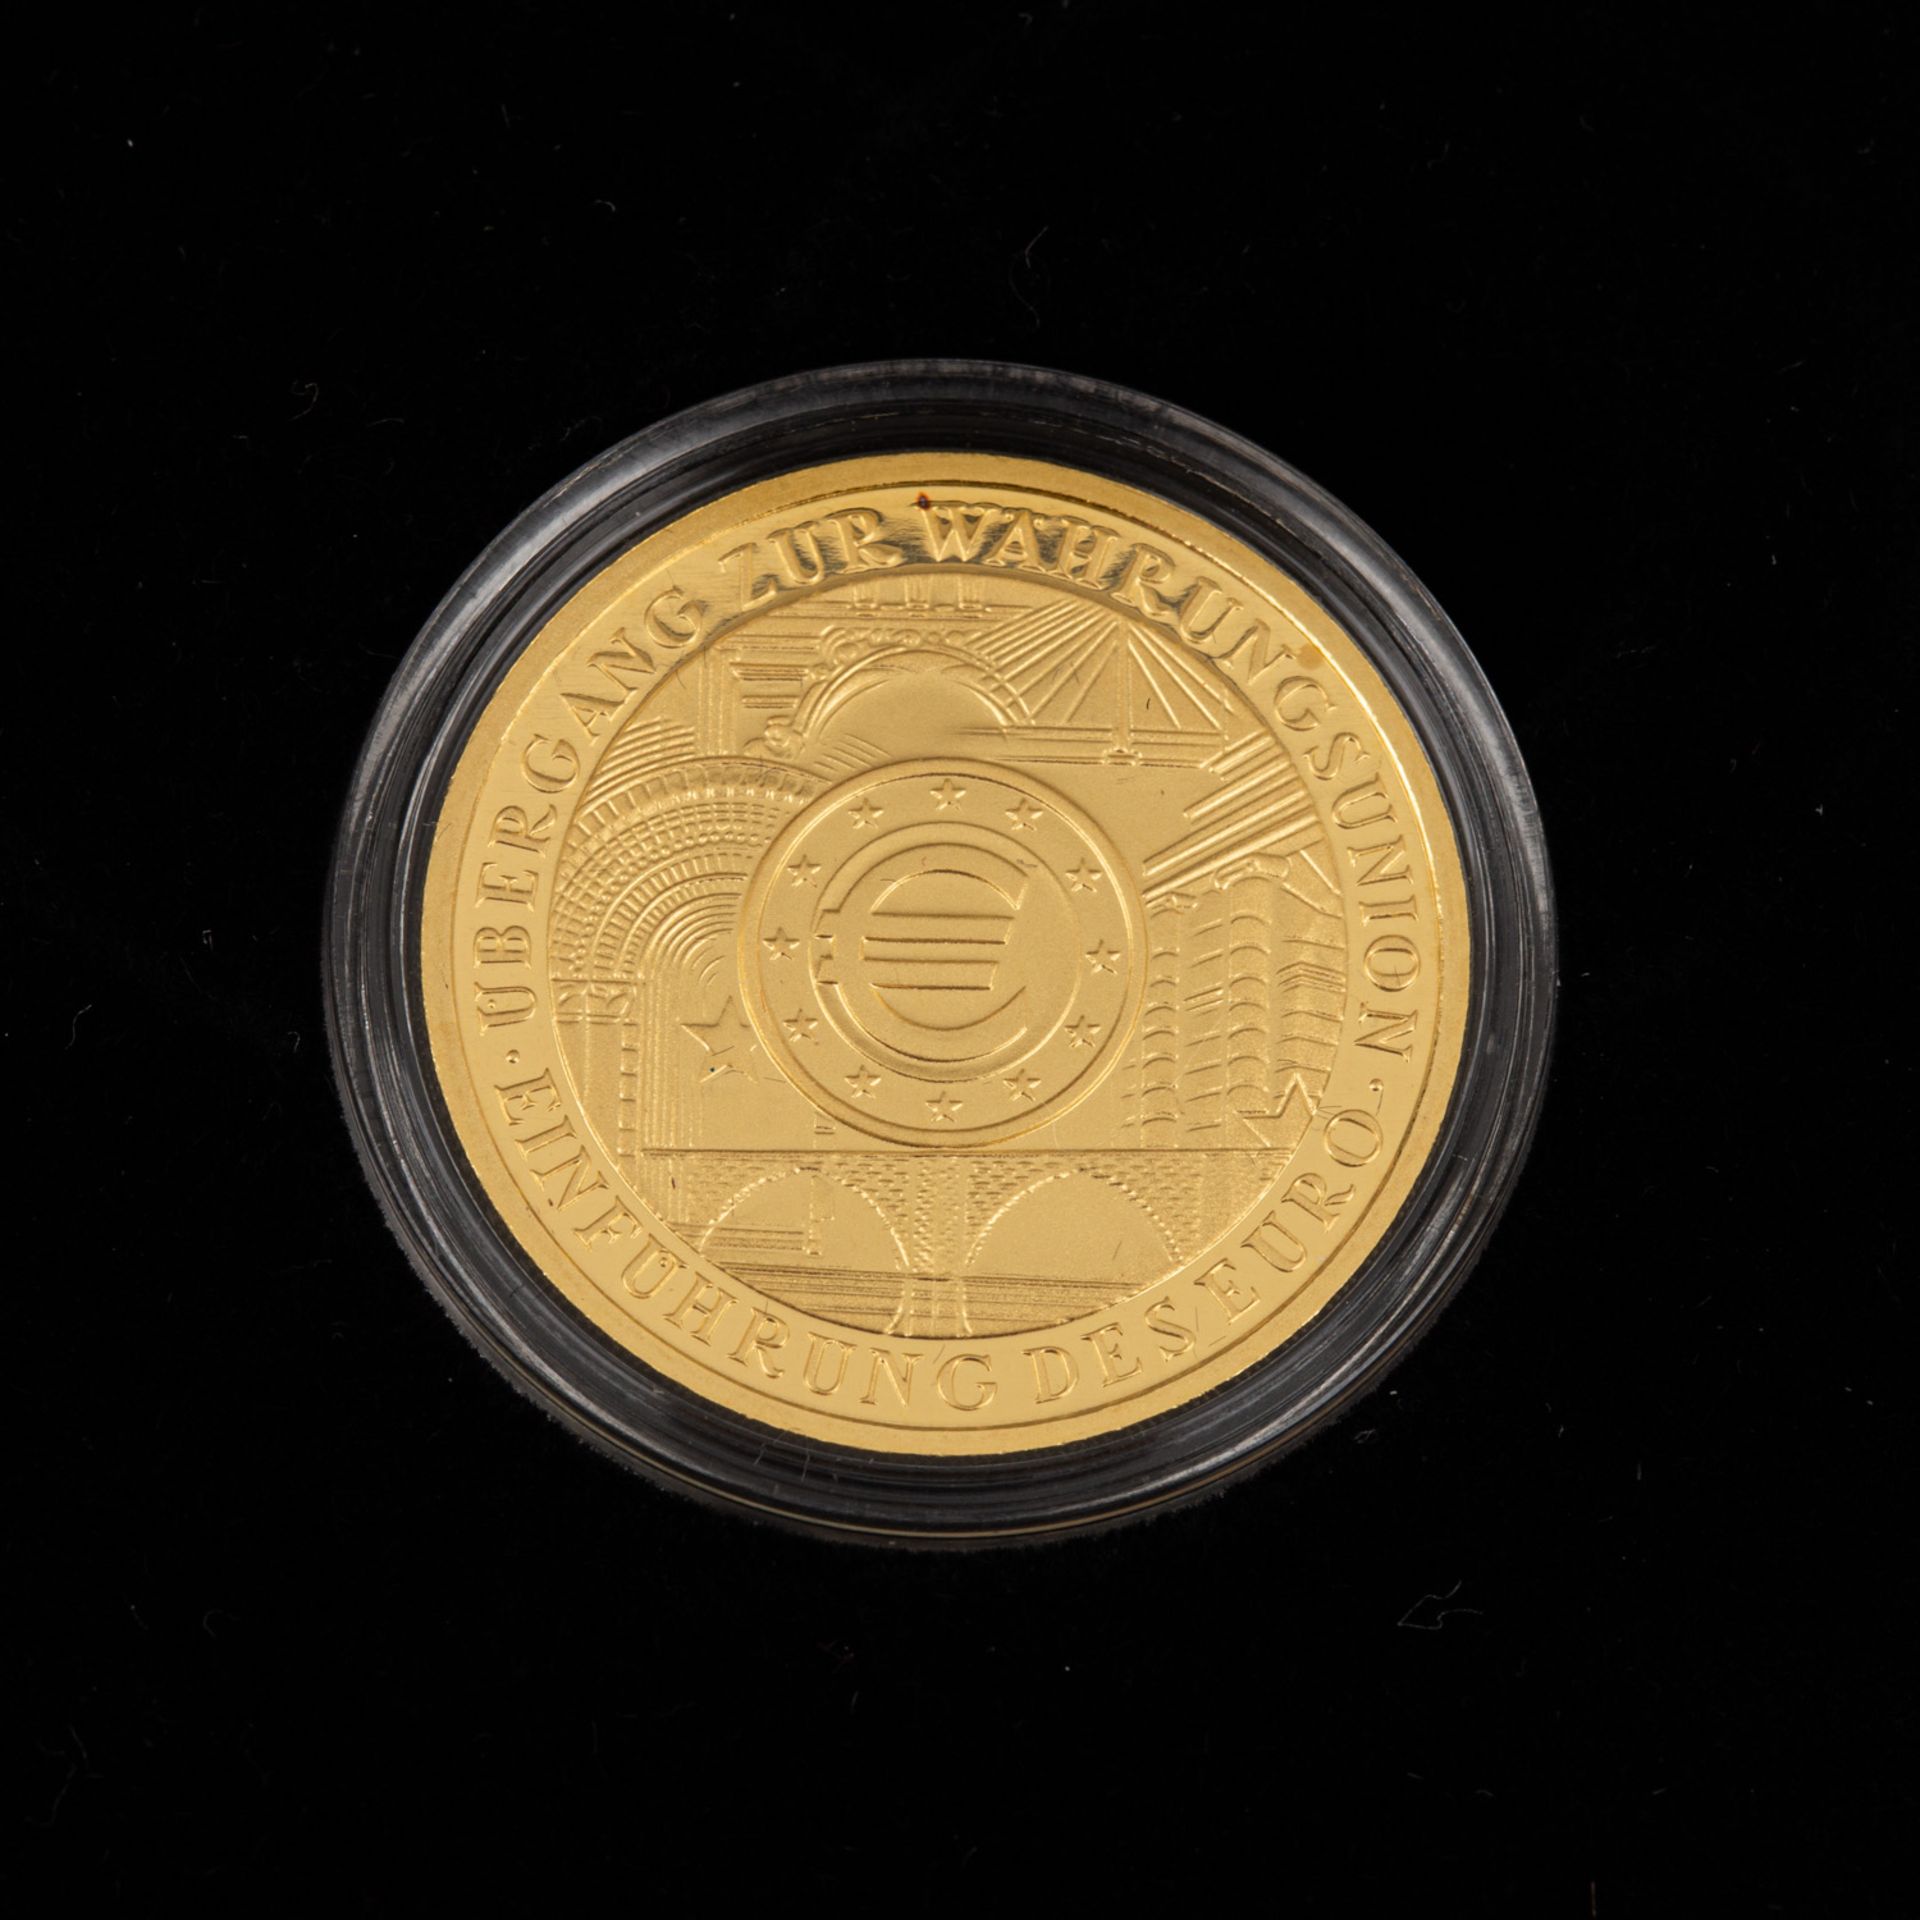 BRD/Gold - 100€ 2002, Übergang zur Währungsunion, - Image 2 of 2